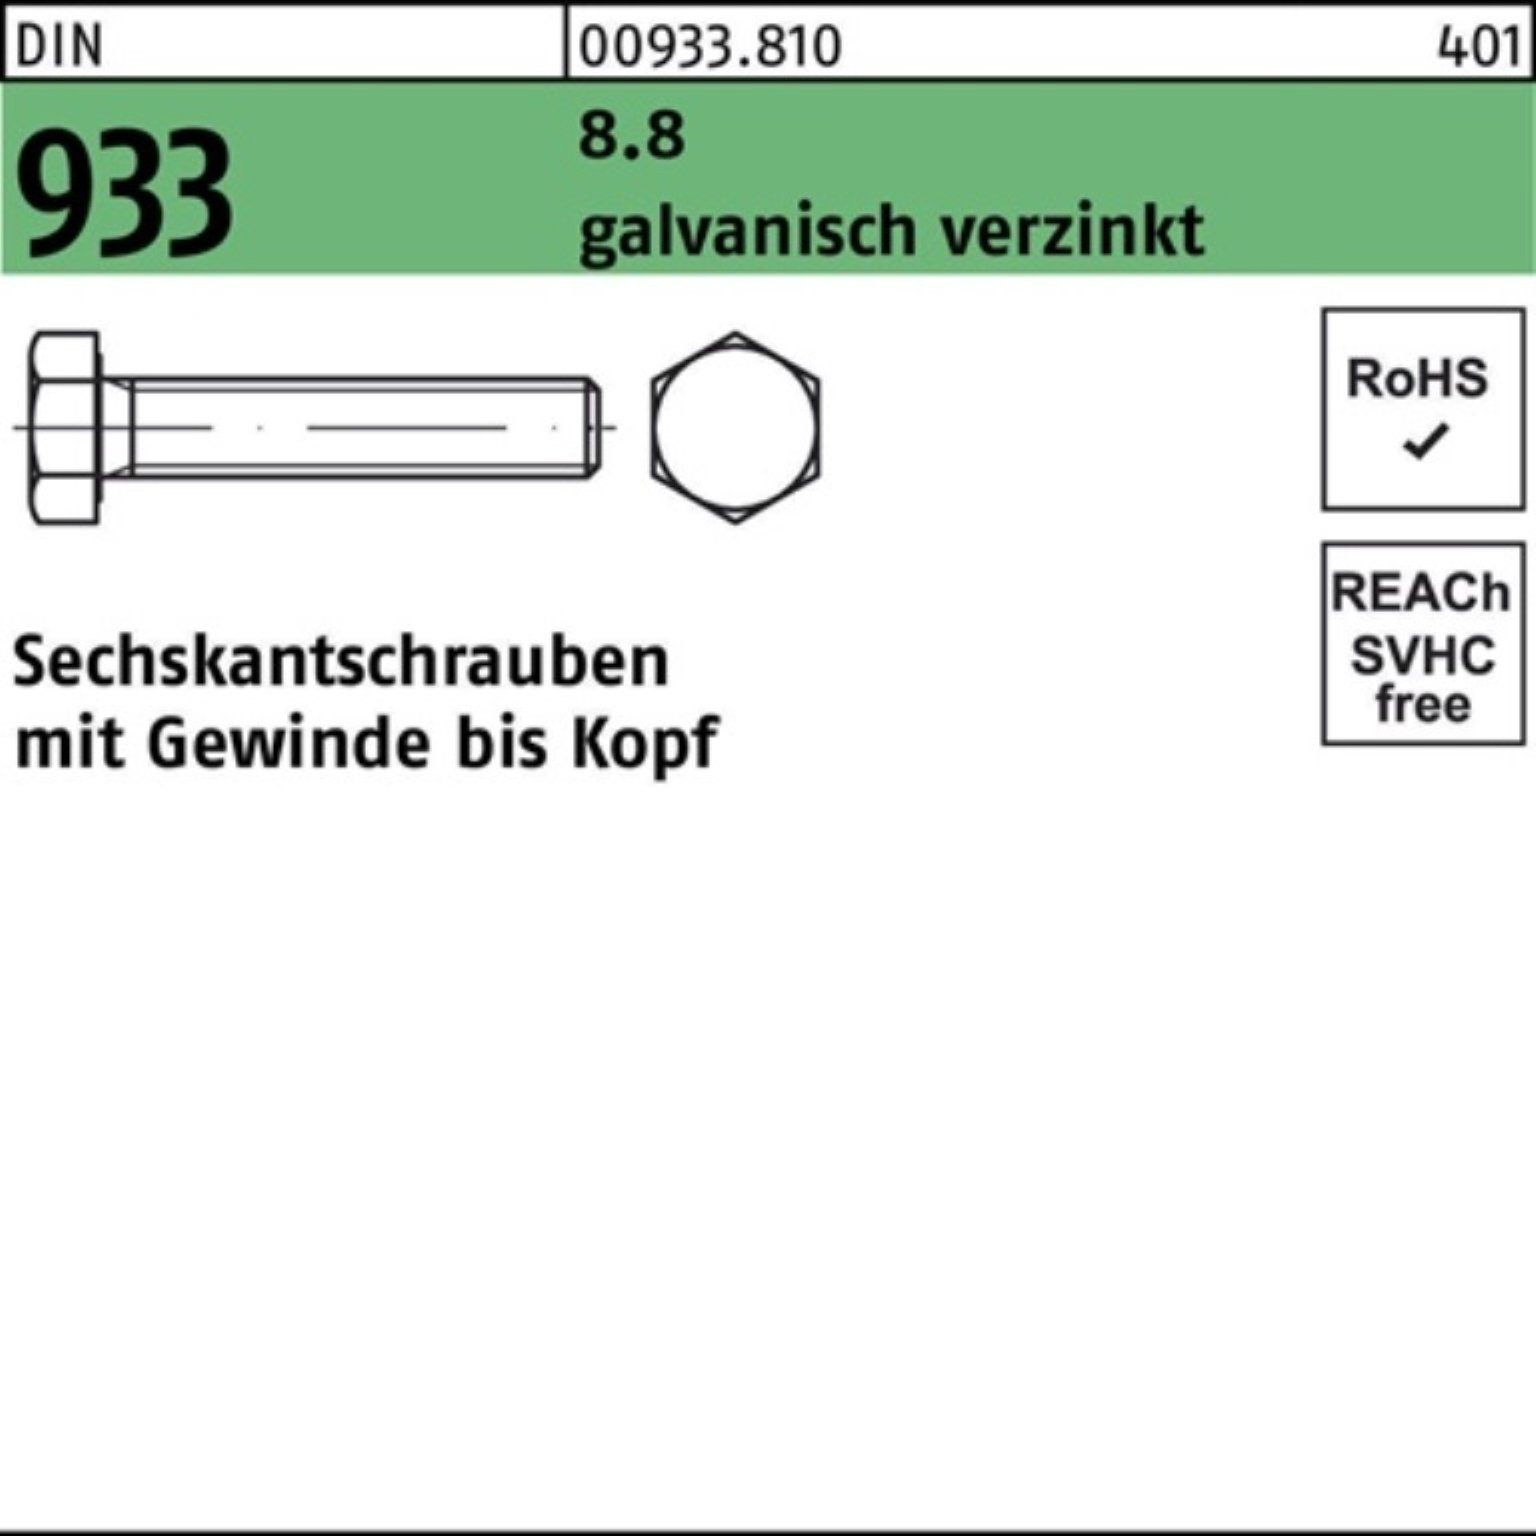 Reyher Sechskantschraube 100er Pack DIN Sechskantschraube Stü 1 933 galv.verz. 8.8 VG 260 M24x